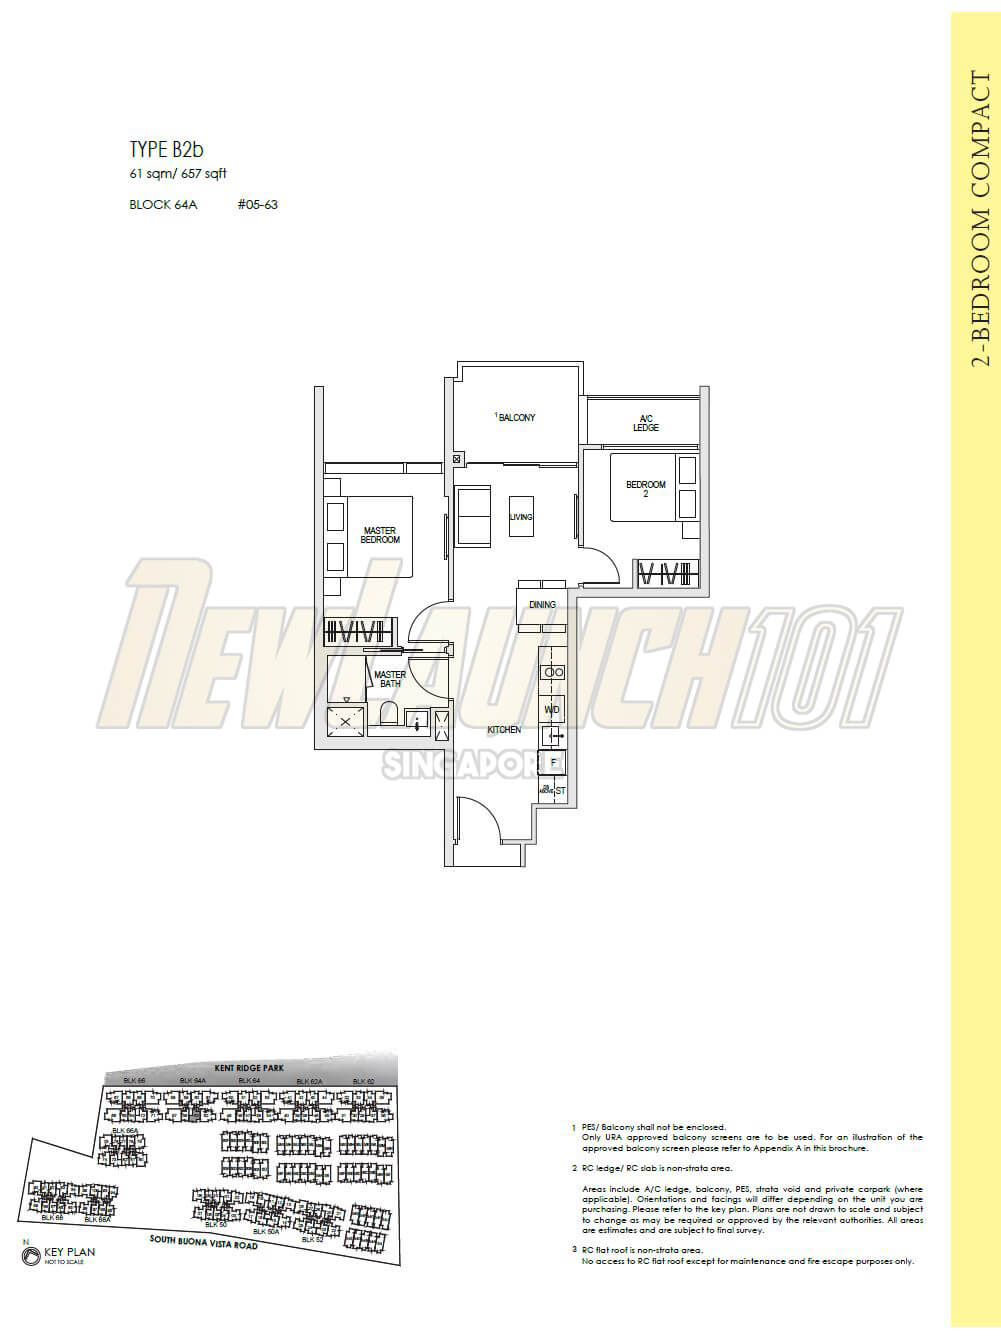 Kent Ridge Hill Residences Floor Plan 2-Bedroom Type B2b